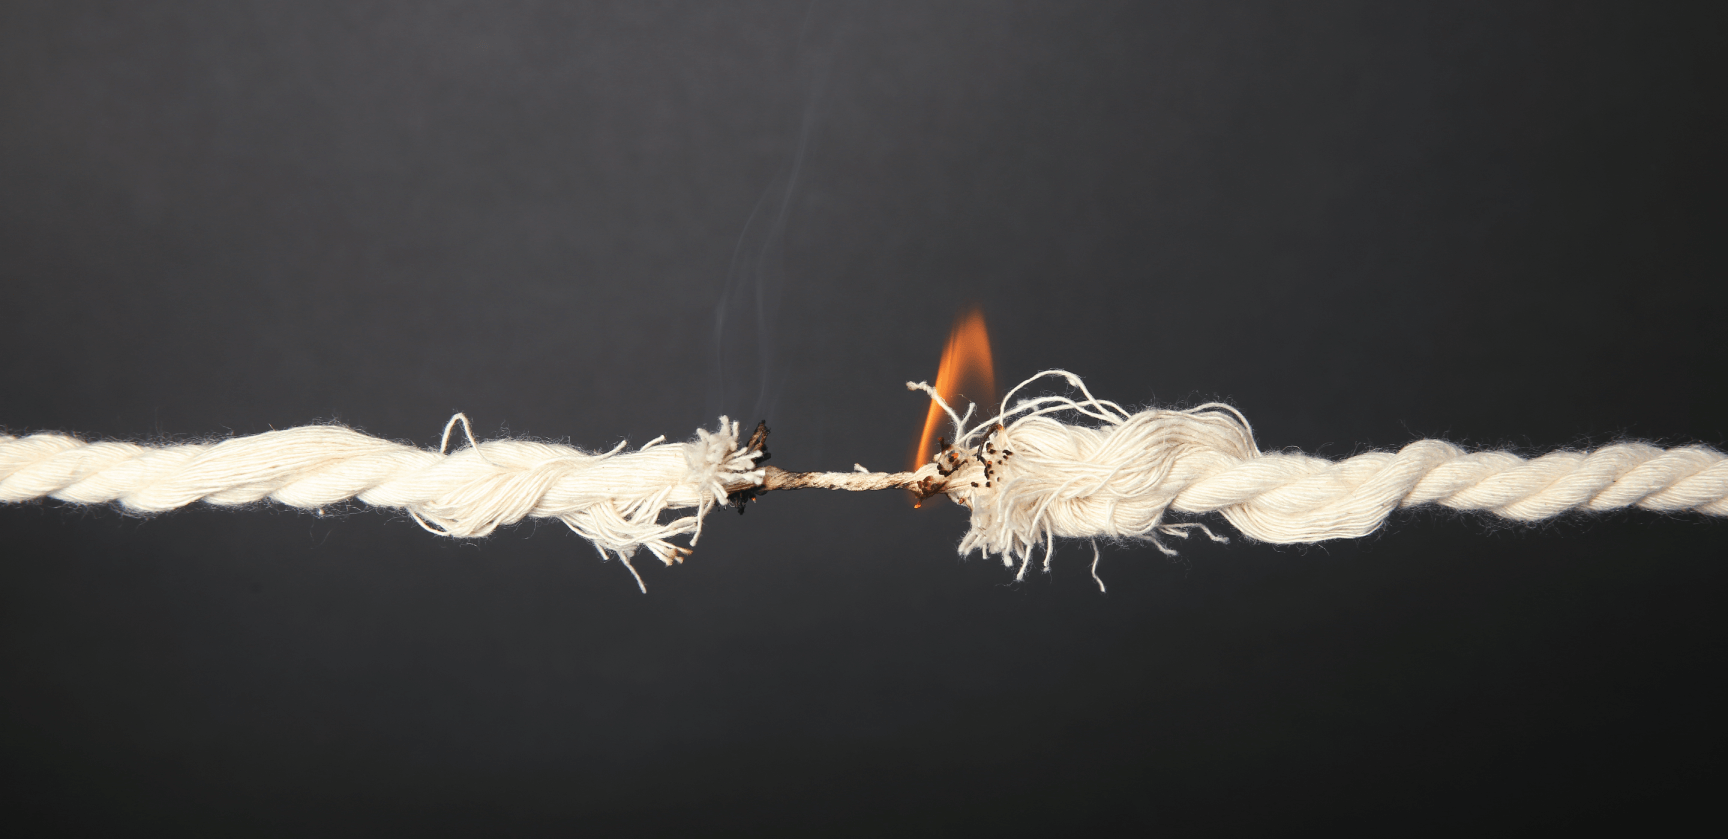 rope burning at both ends